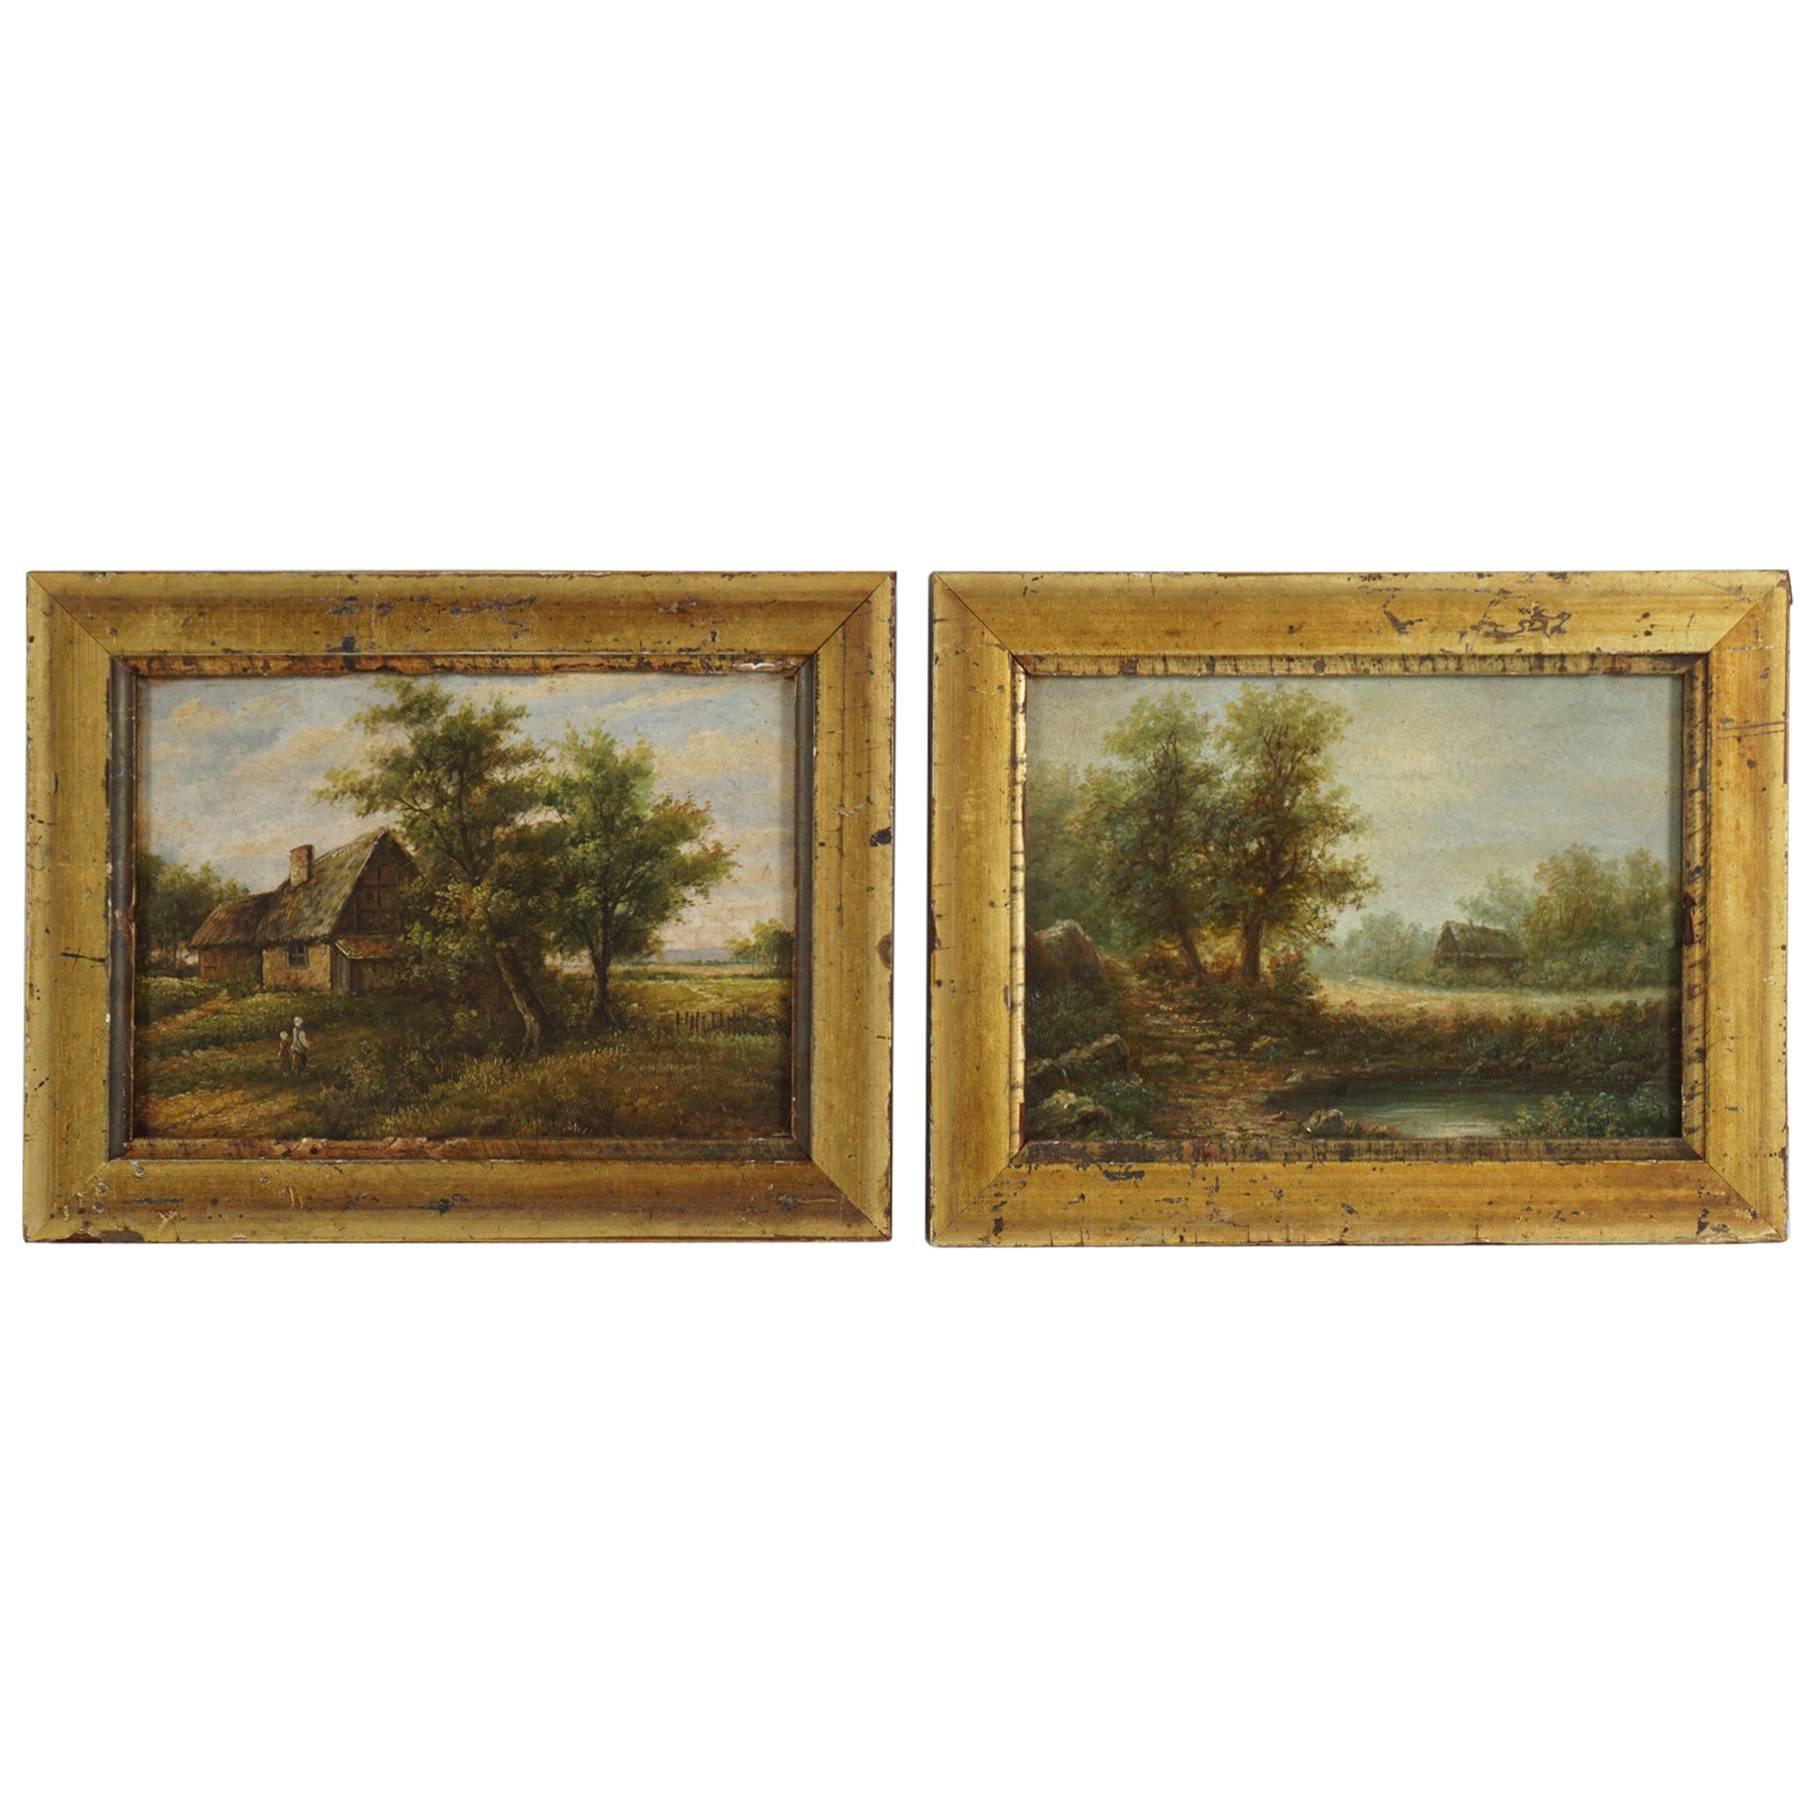 Pair of Small Mid-19th Century European Oil Paintings on Panel